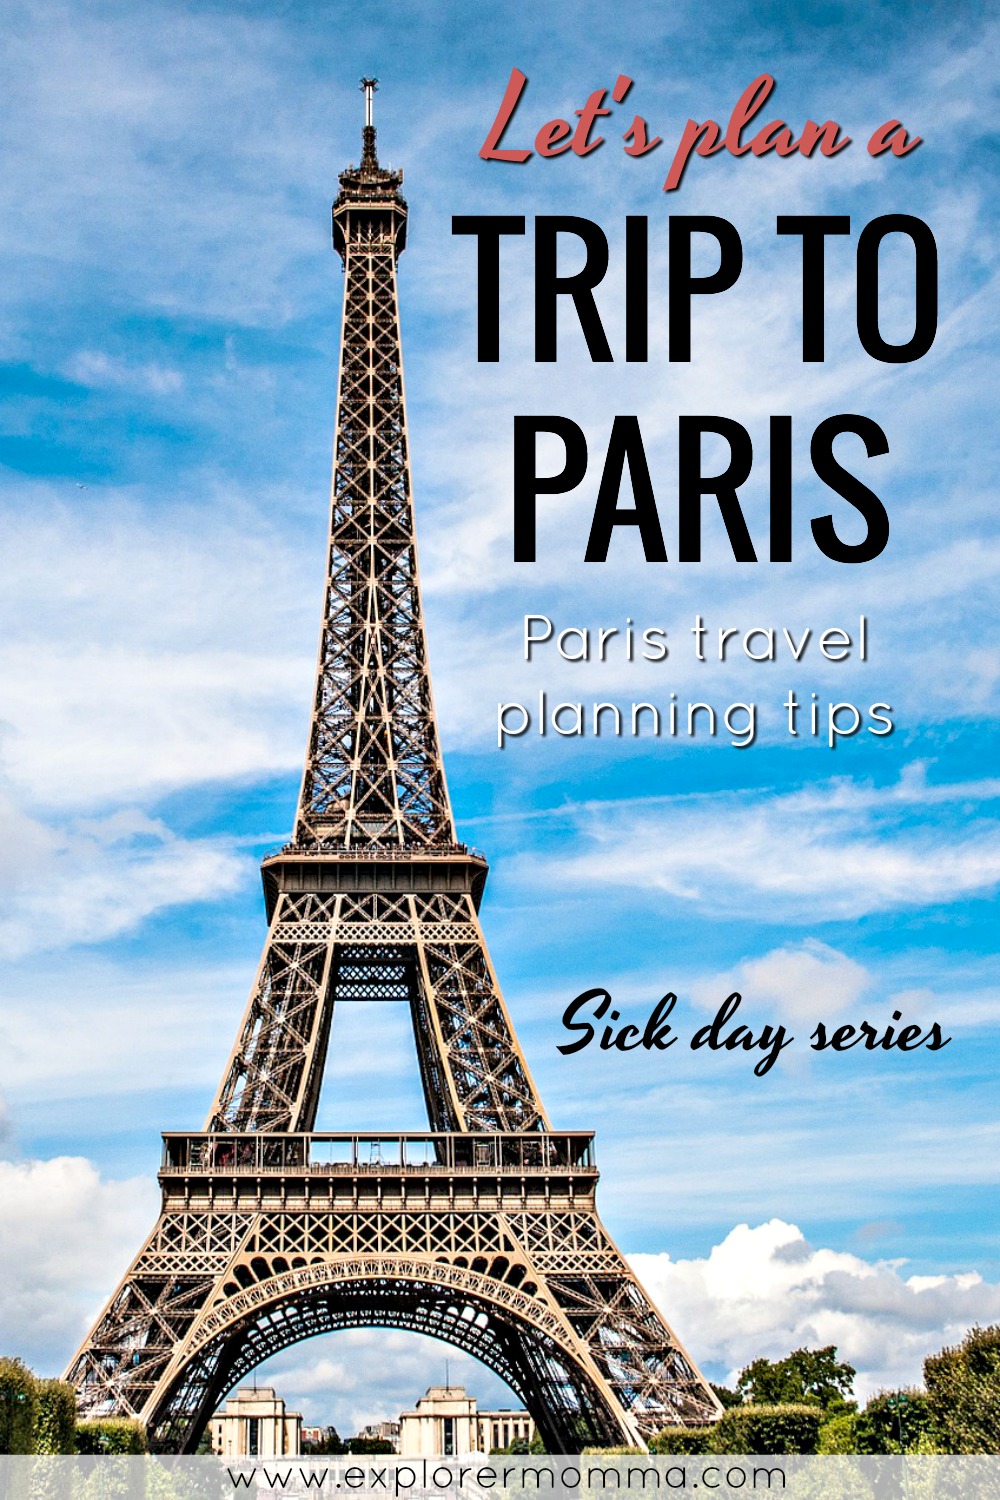 paris 6 travel guide